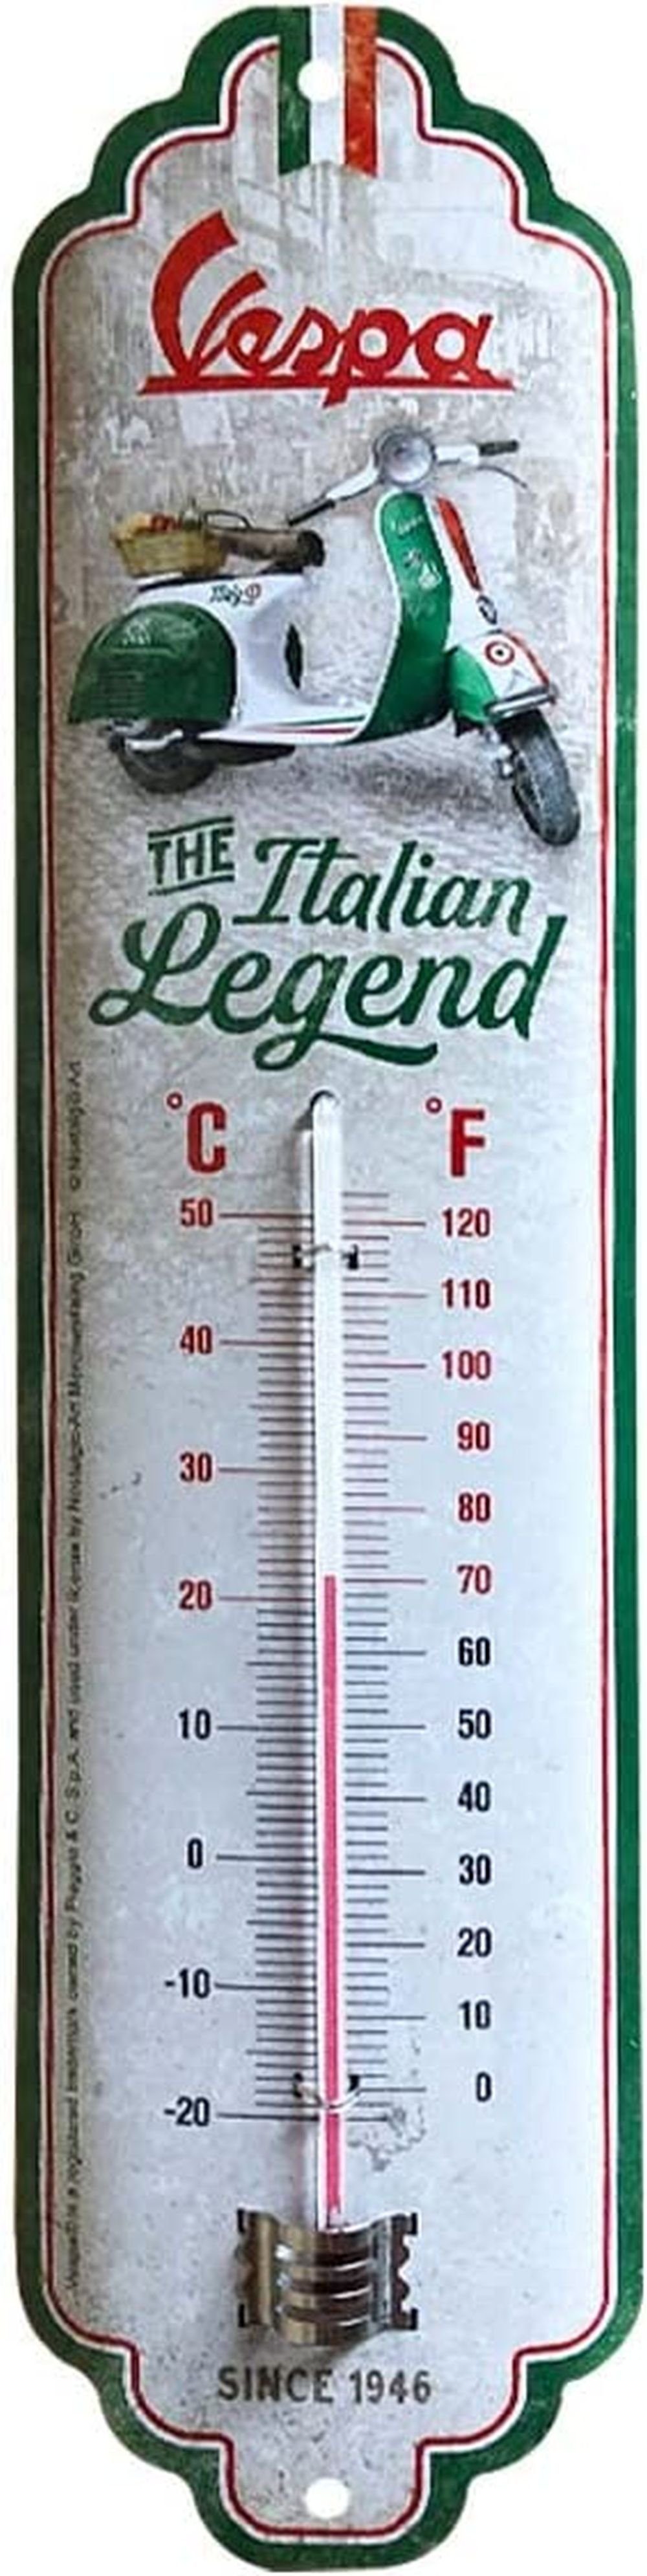 https://i.otto.de/i/otto/9e3d6713-282f-579c-baff-6ffceb617e0c/nostalgic-art-raumthermometer-retro-metall-thermometer-innen-aussen-analog-vespa.jpg?$formatz$